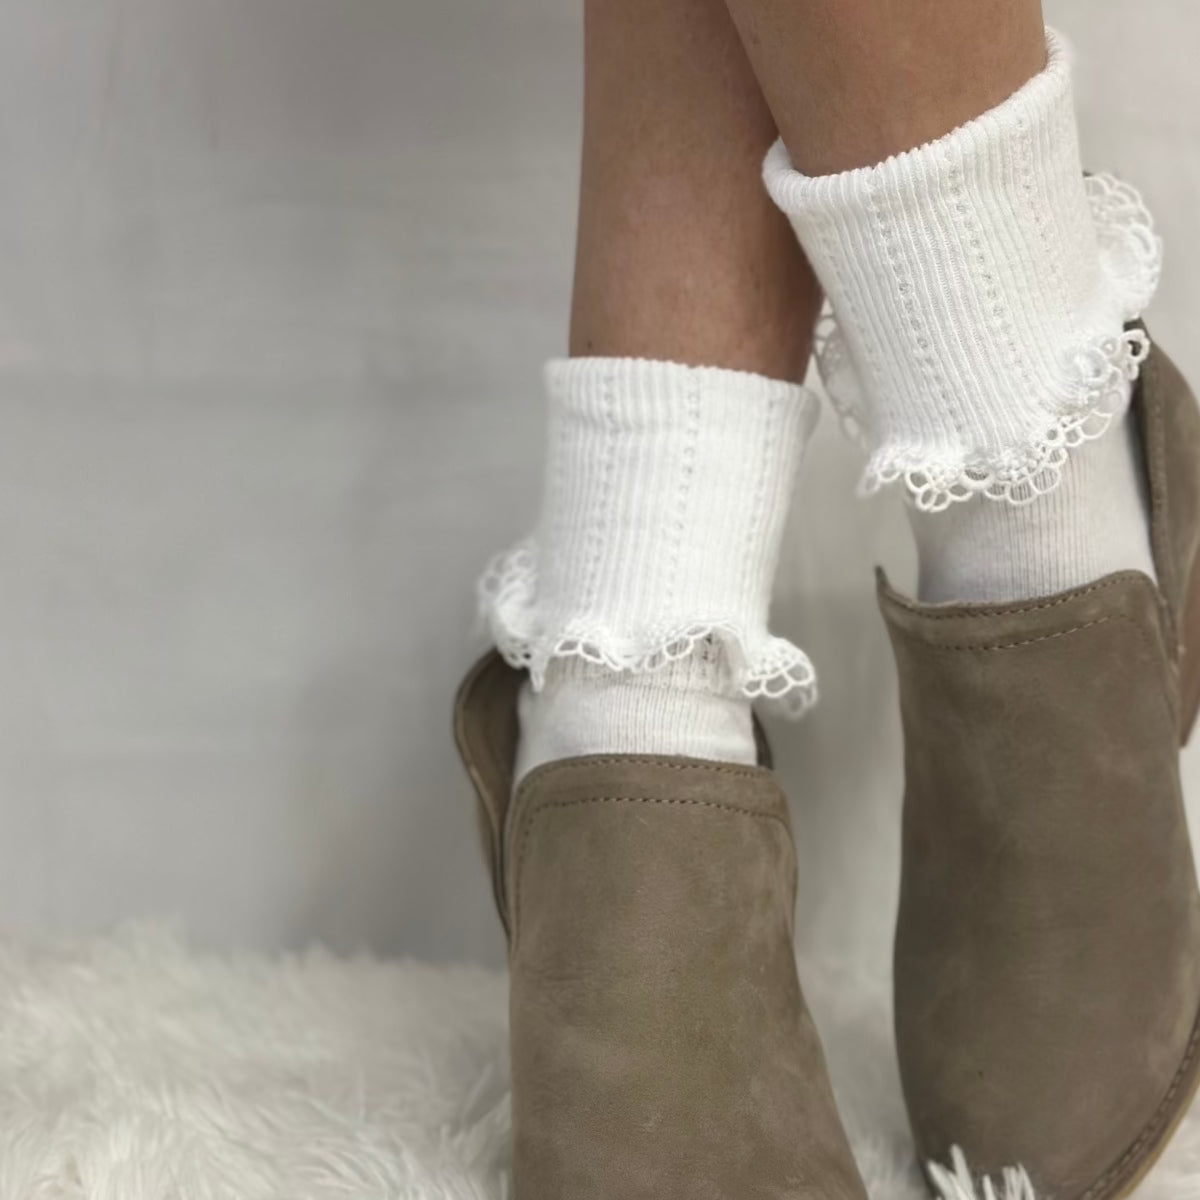 SCALLOP cuff ankle socks women - white